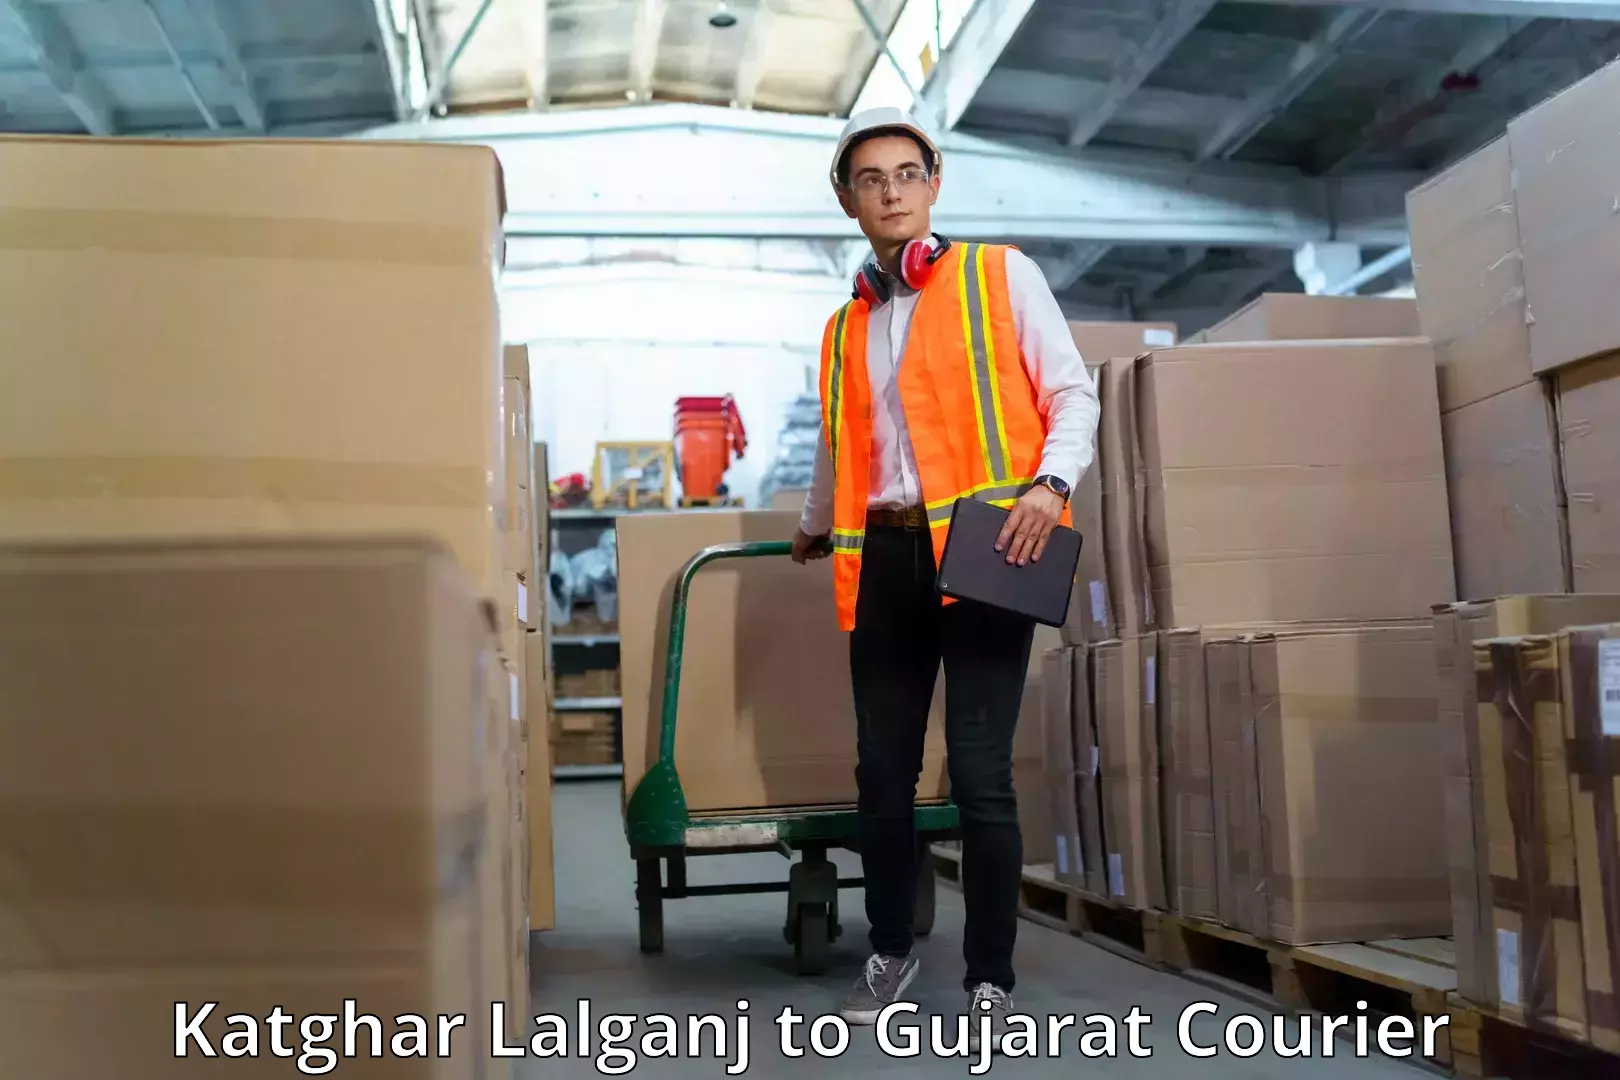 Courier service comparison Katghar Lalganj to Anand